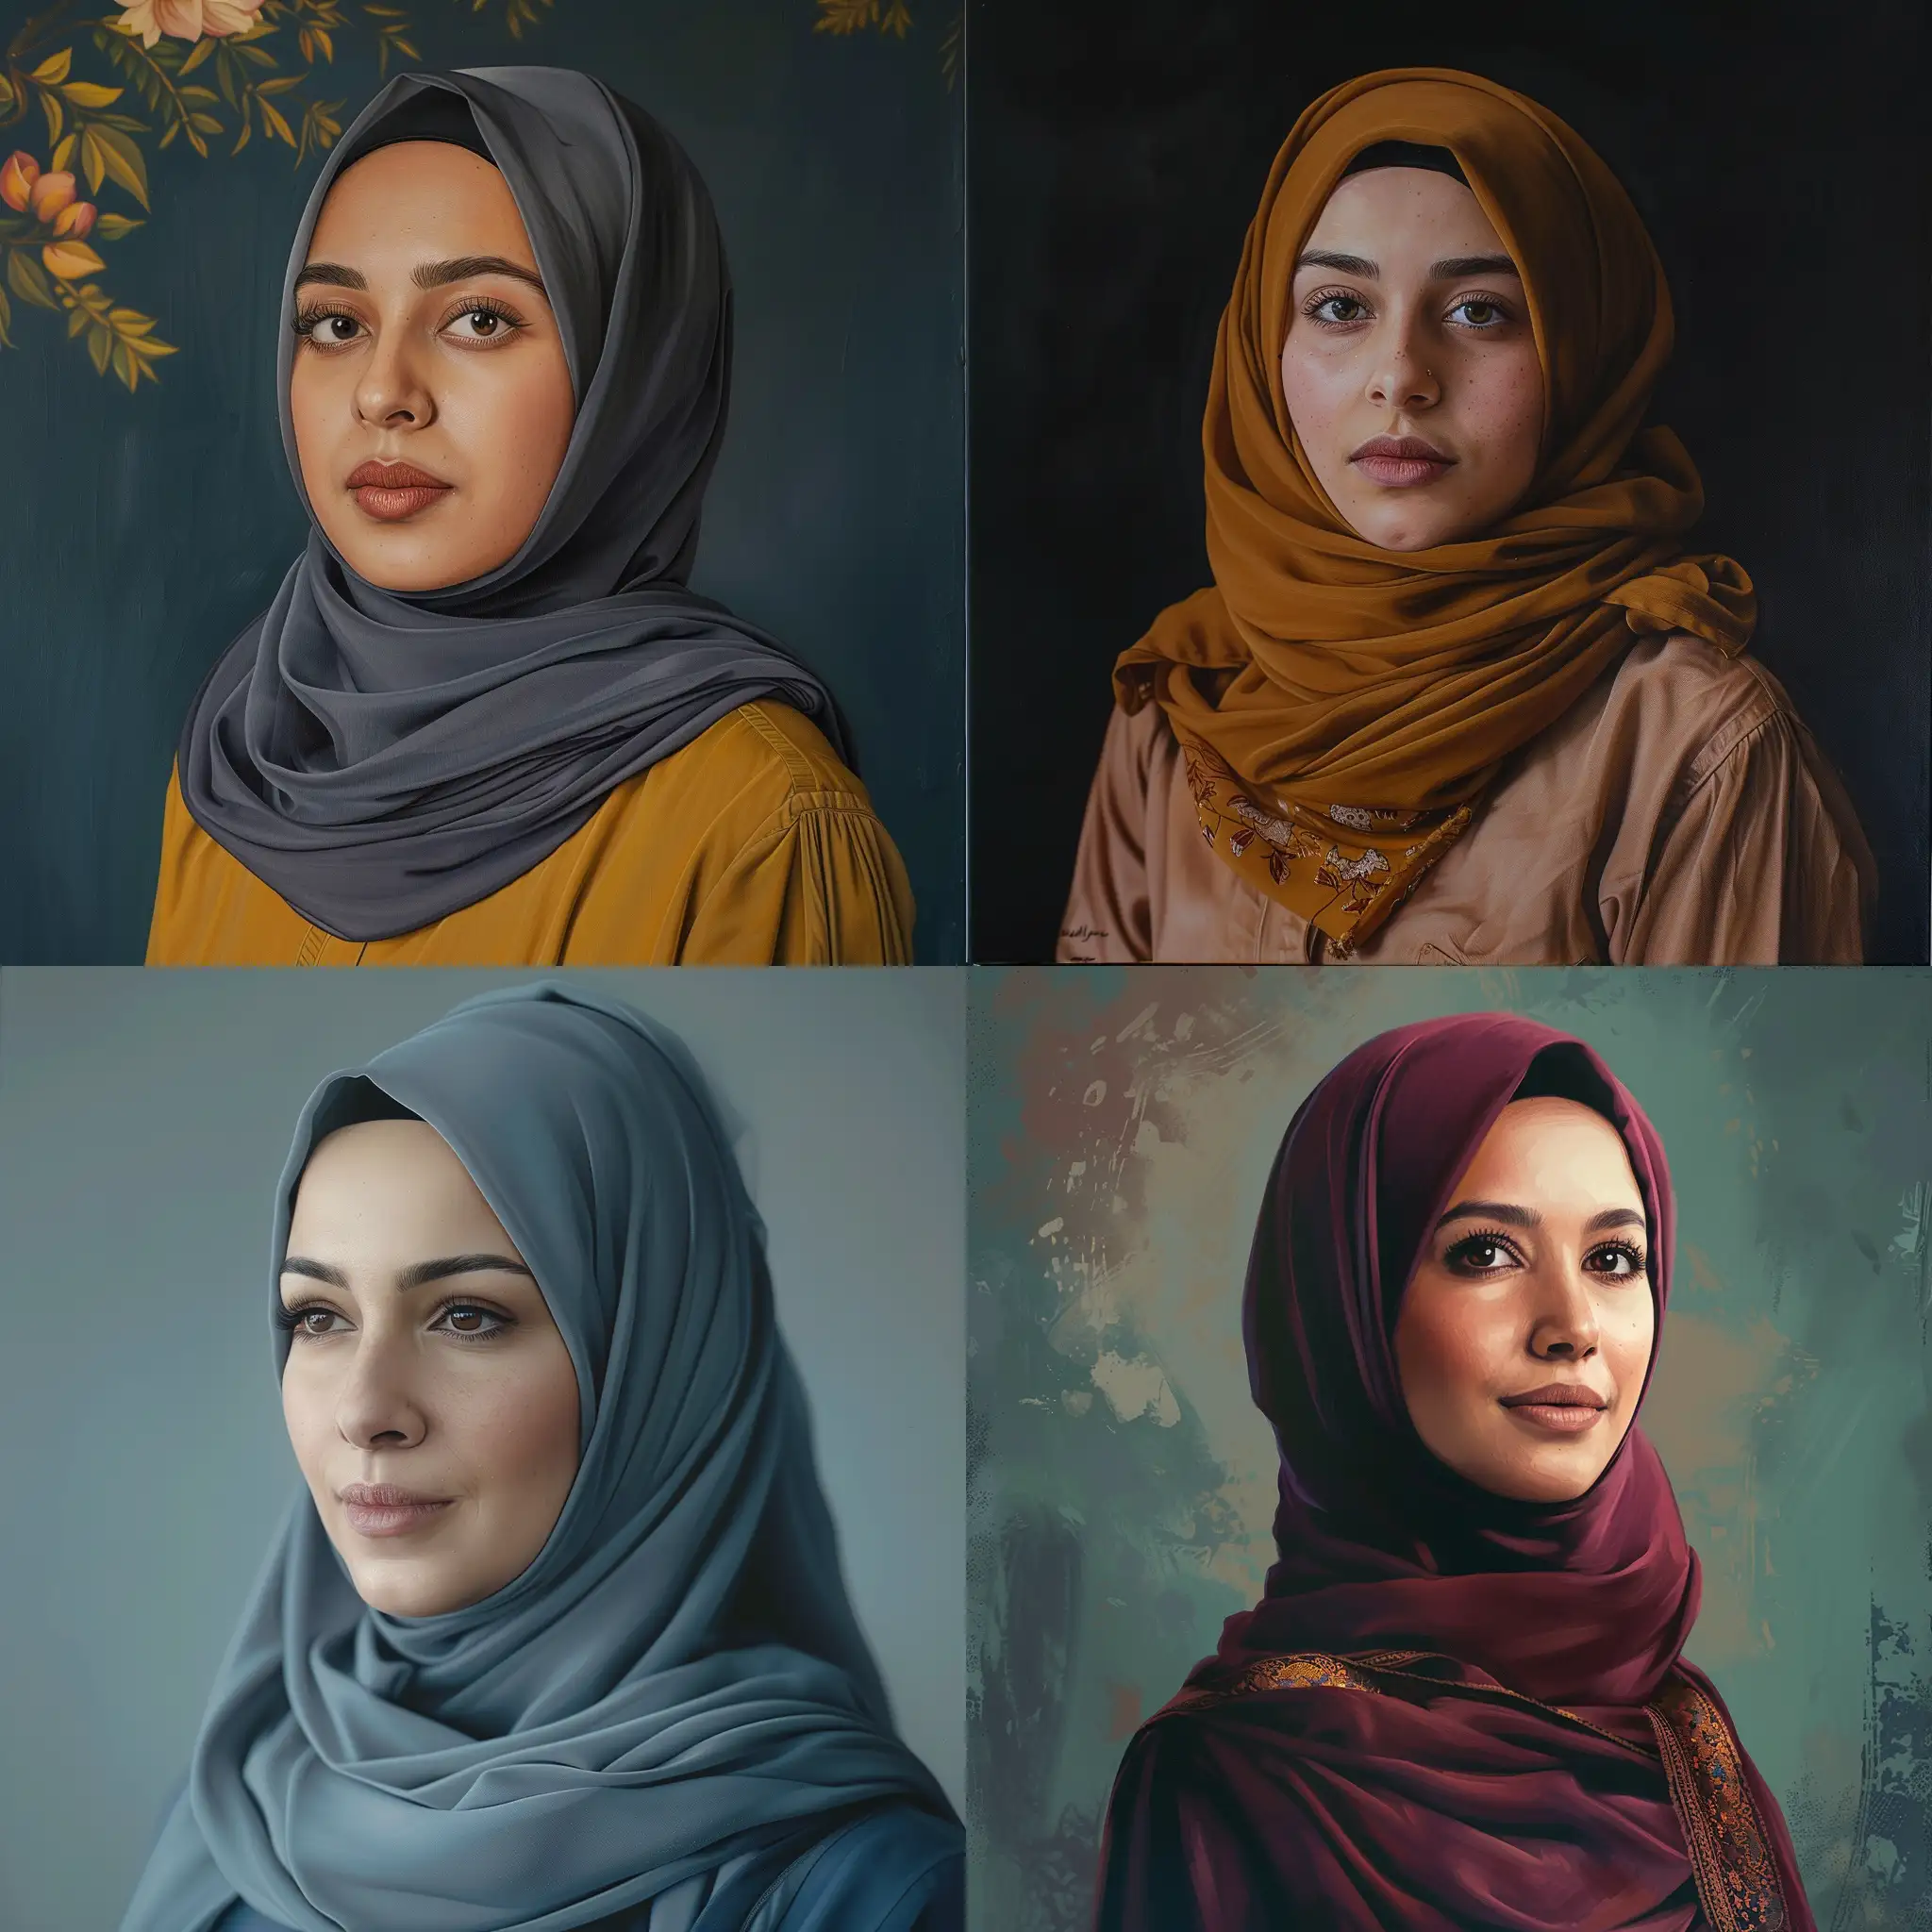 A portrait of a Muslim woman wearing Hijab